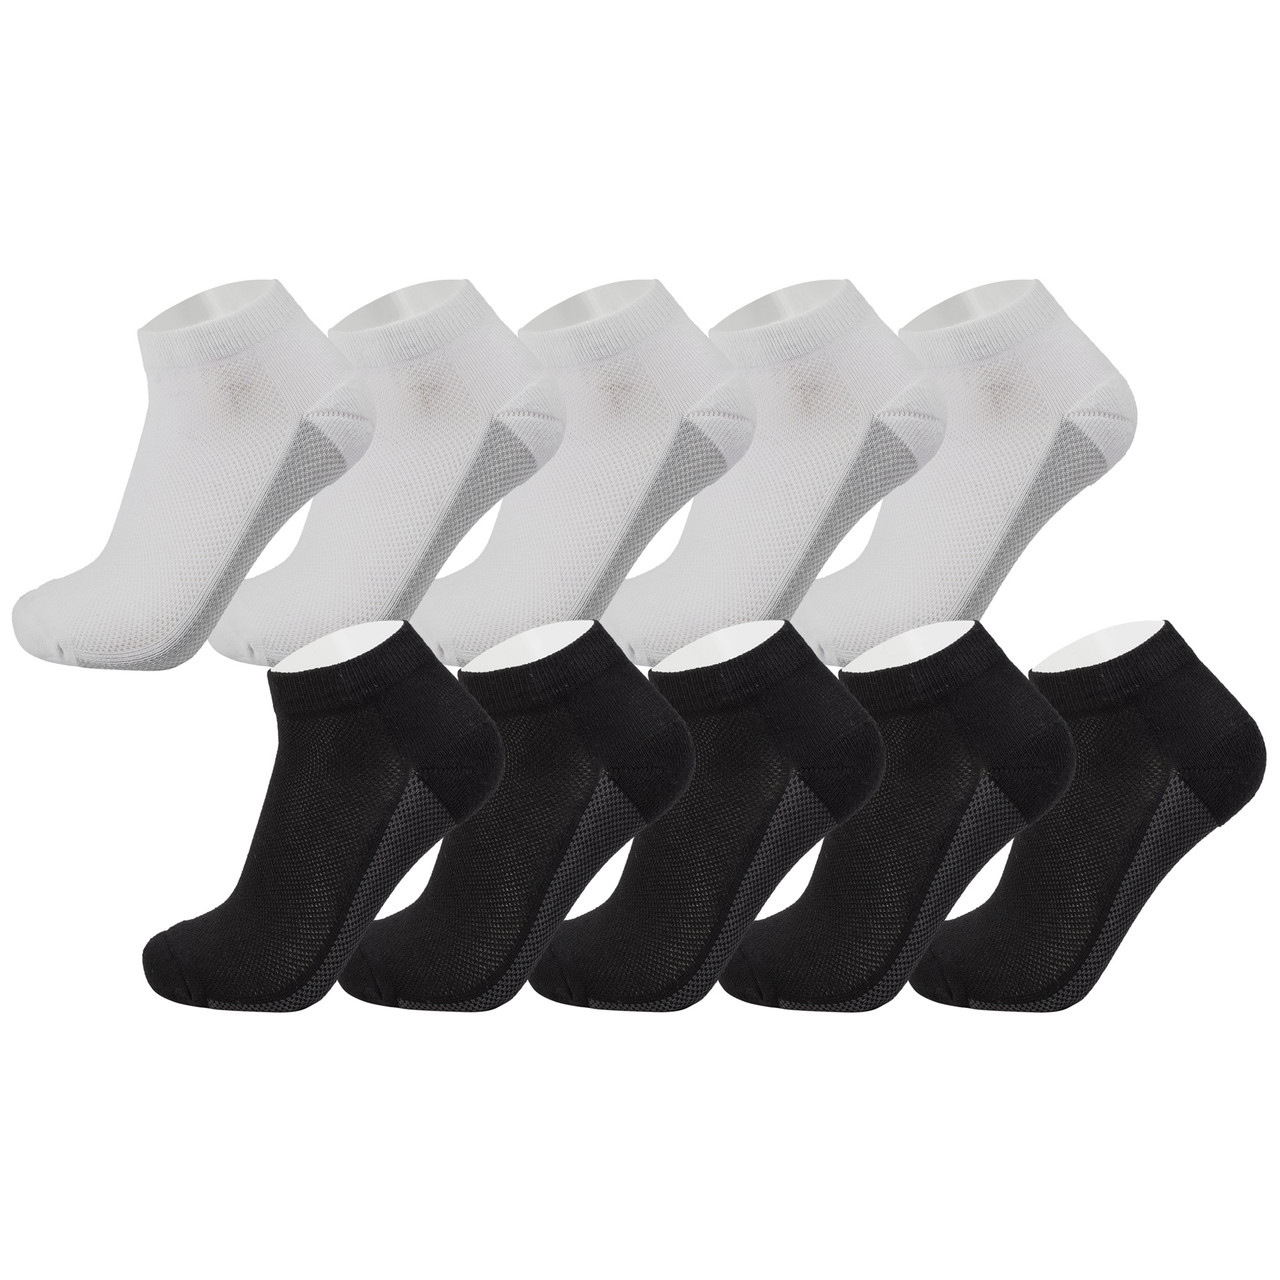 Alpine Swiss Mens 8 Pack Cotton Ankle Socks Athletic Performance